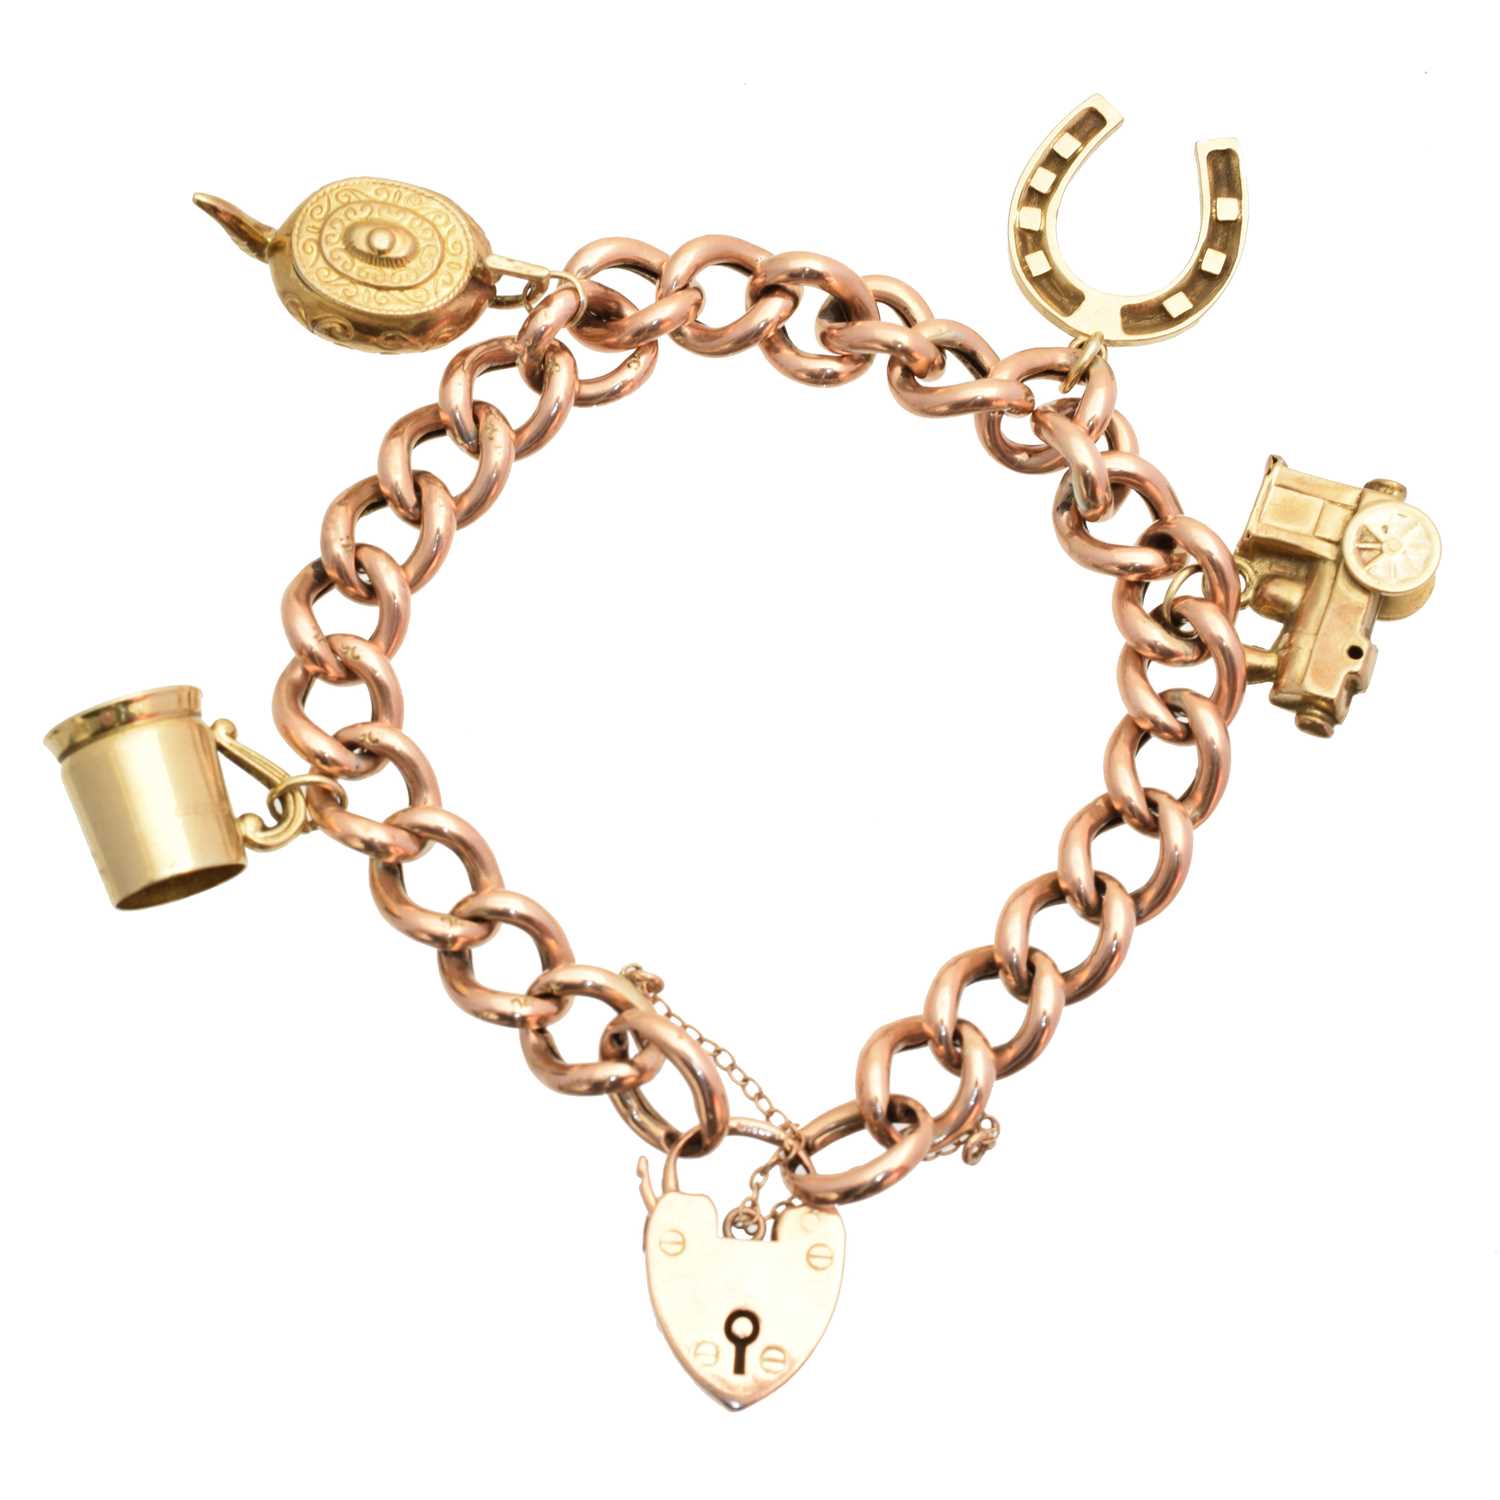 Lot 5 - A 9ct gold charm bracelet